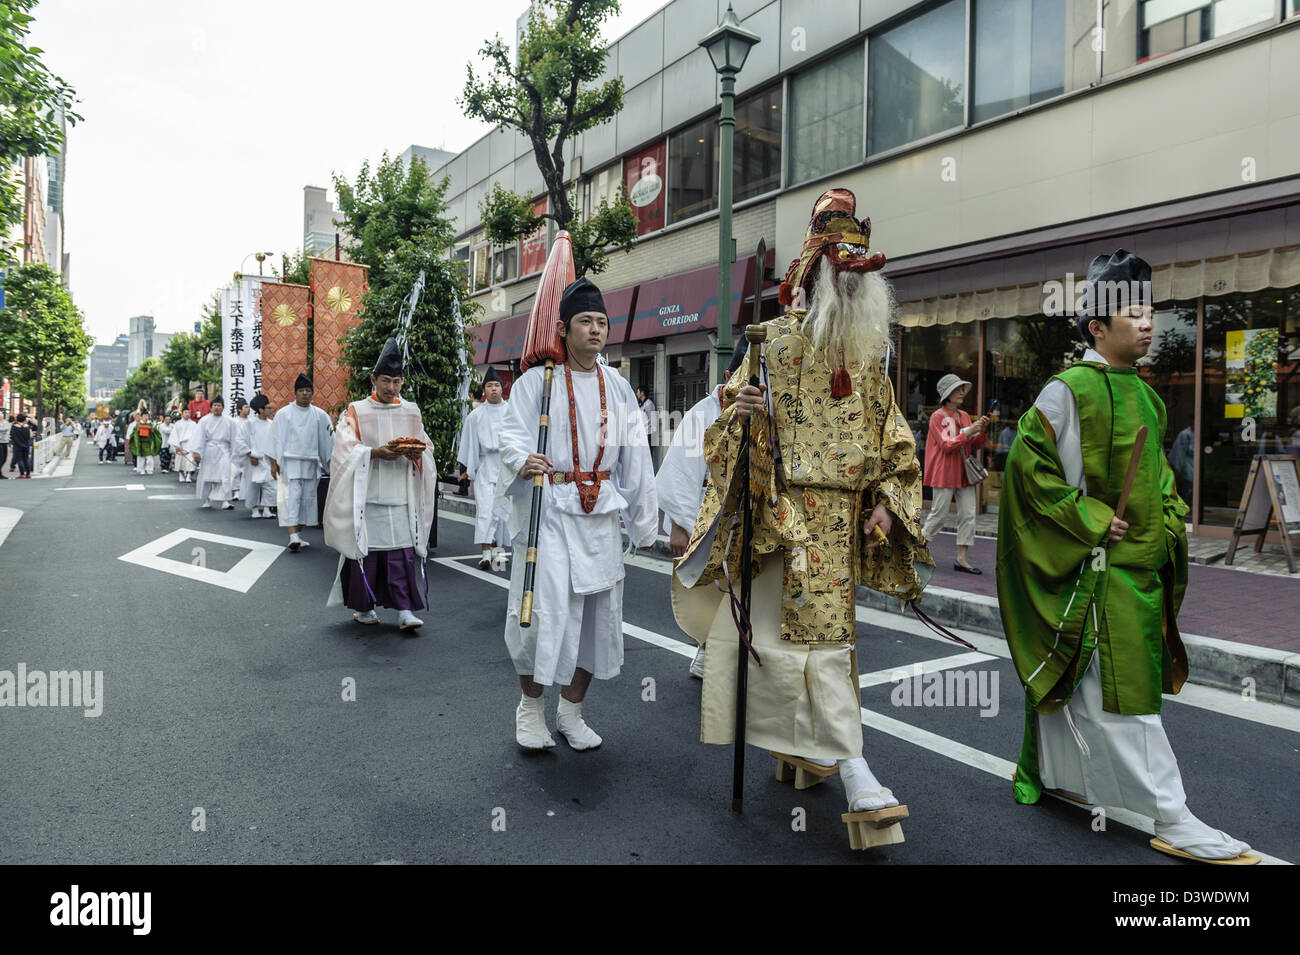 Religious parade on the streets of Tokyo, Japan, Asia Stock Photo